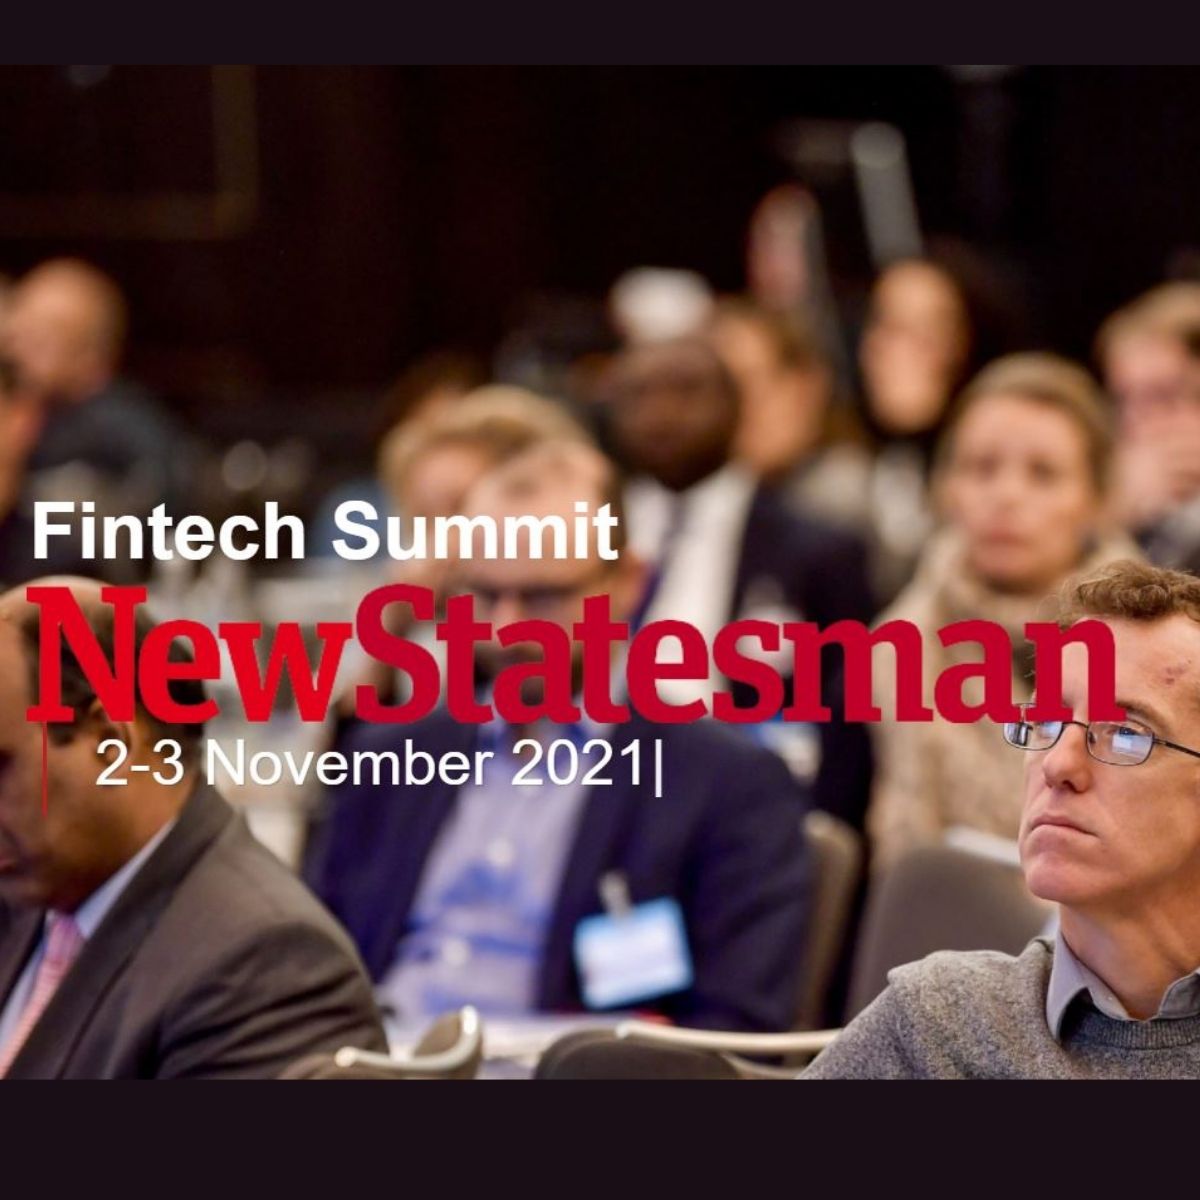 New Statesman Fintech Summit